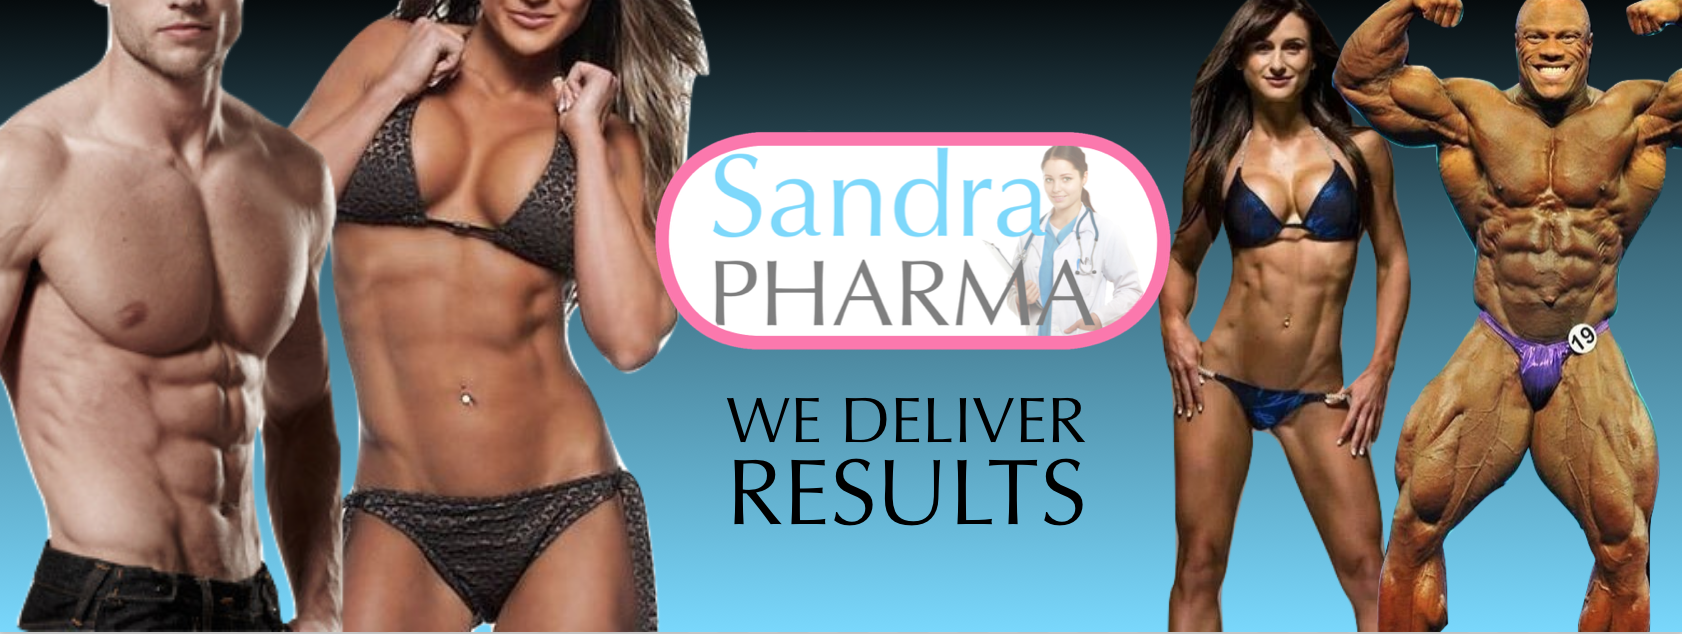 Sandra Pharma